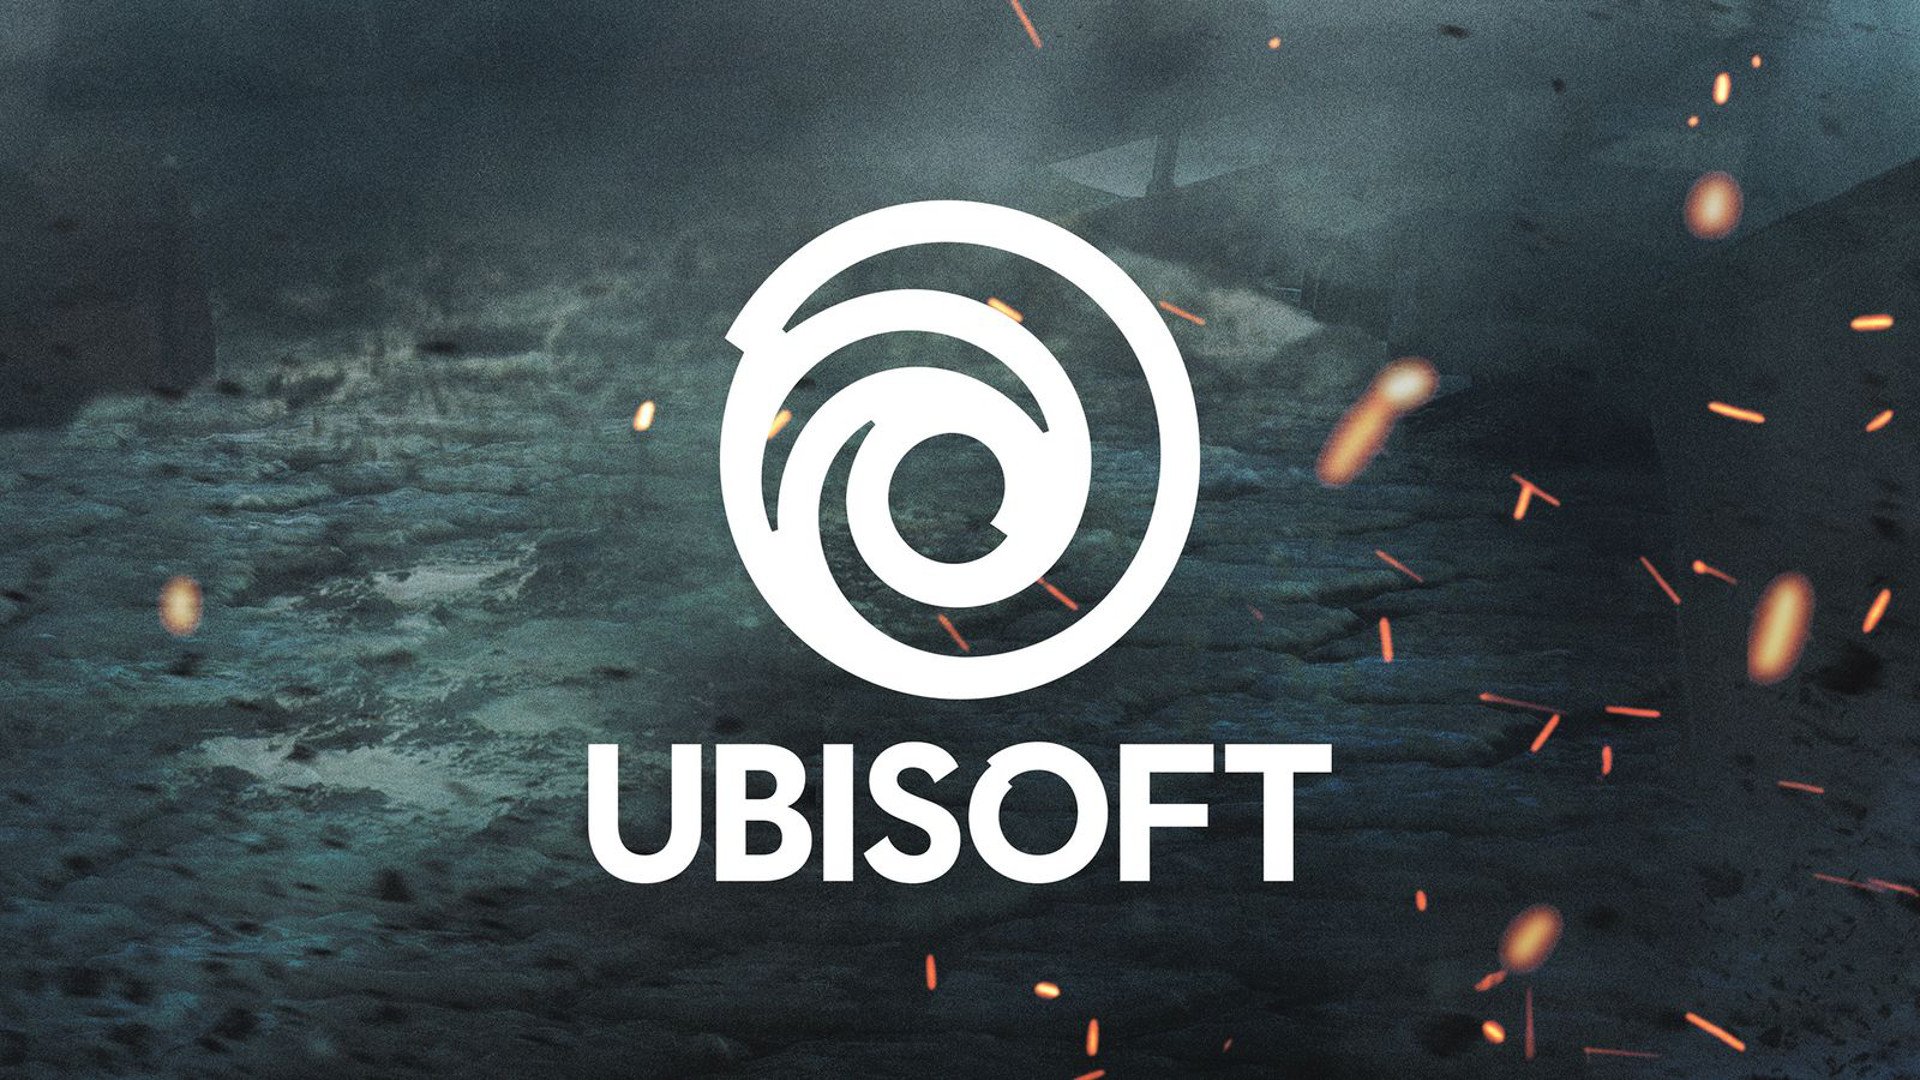 ubisoft-logo-2018.jpg